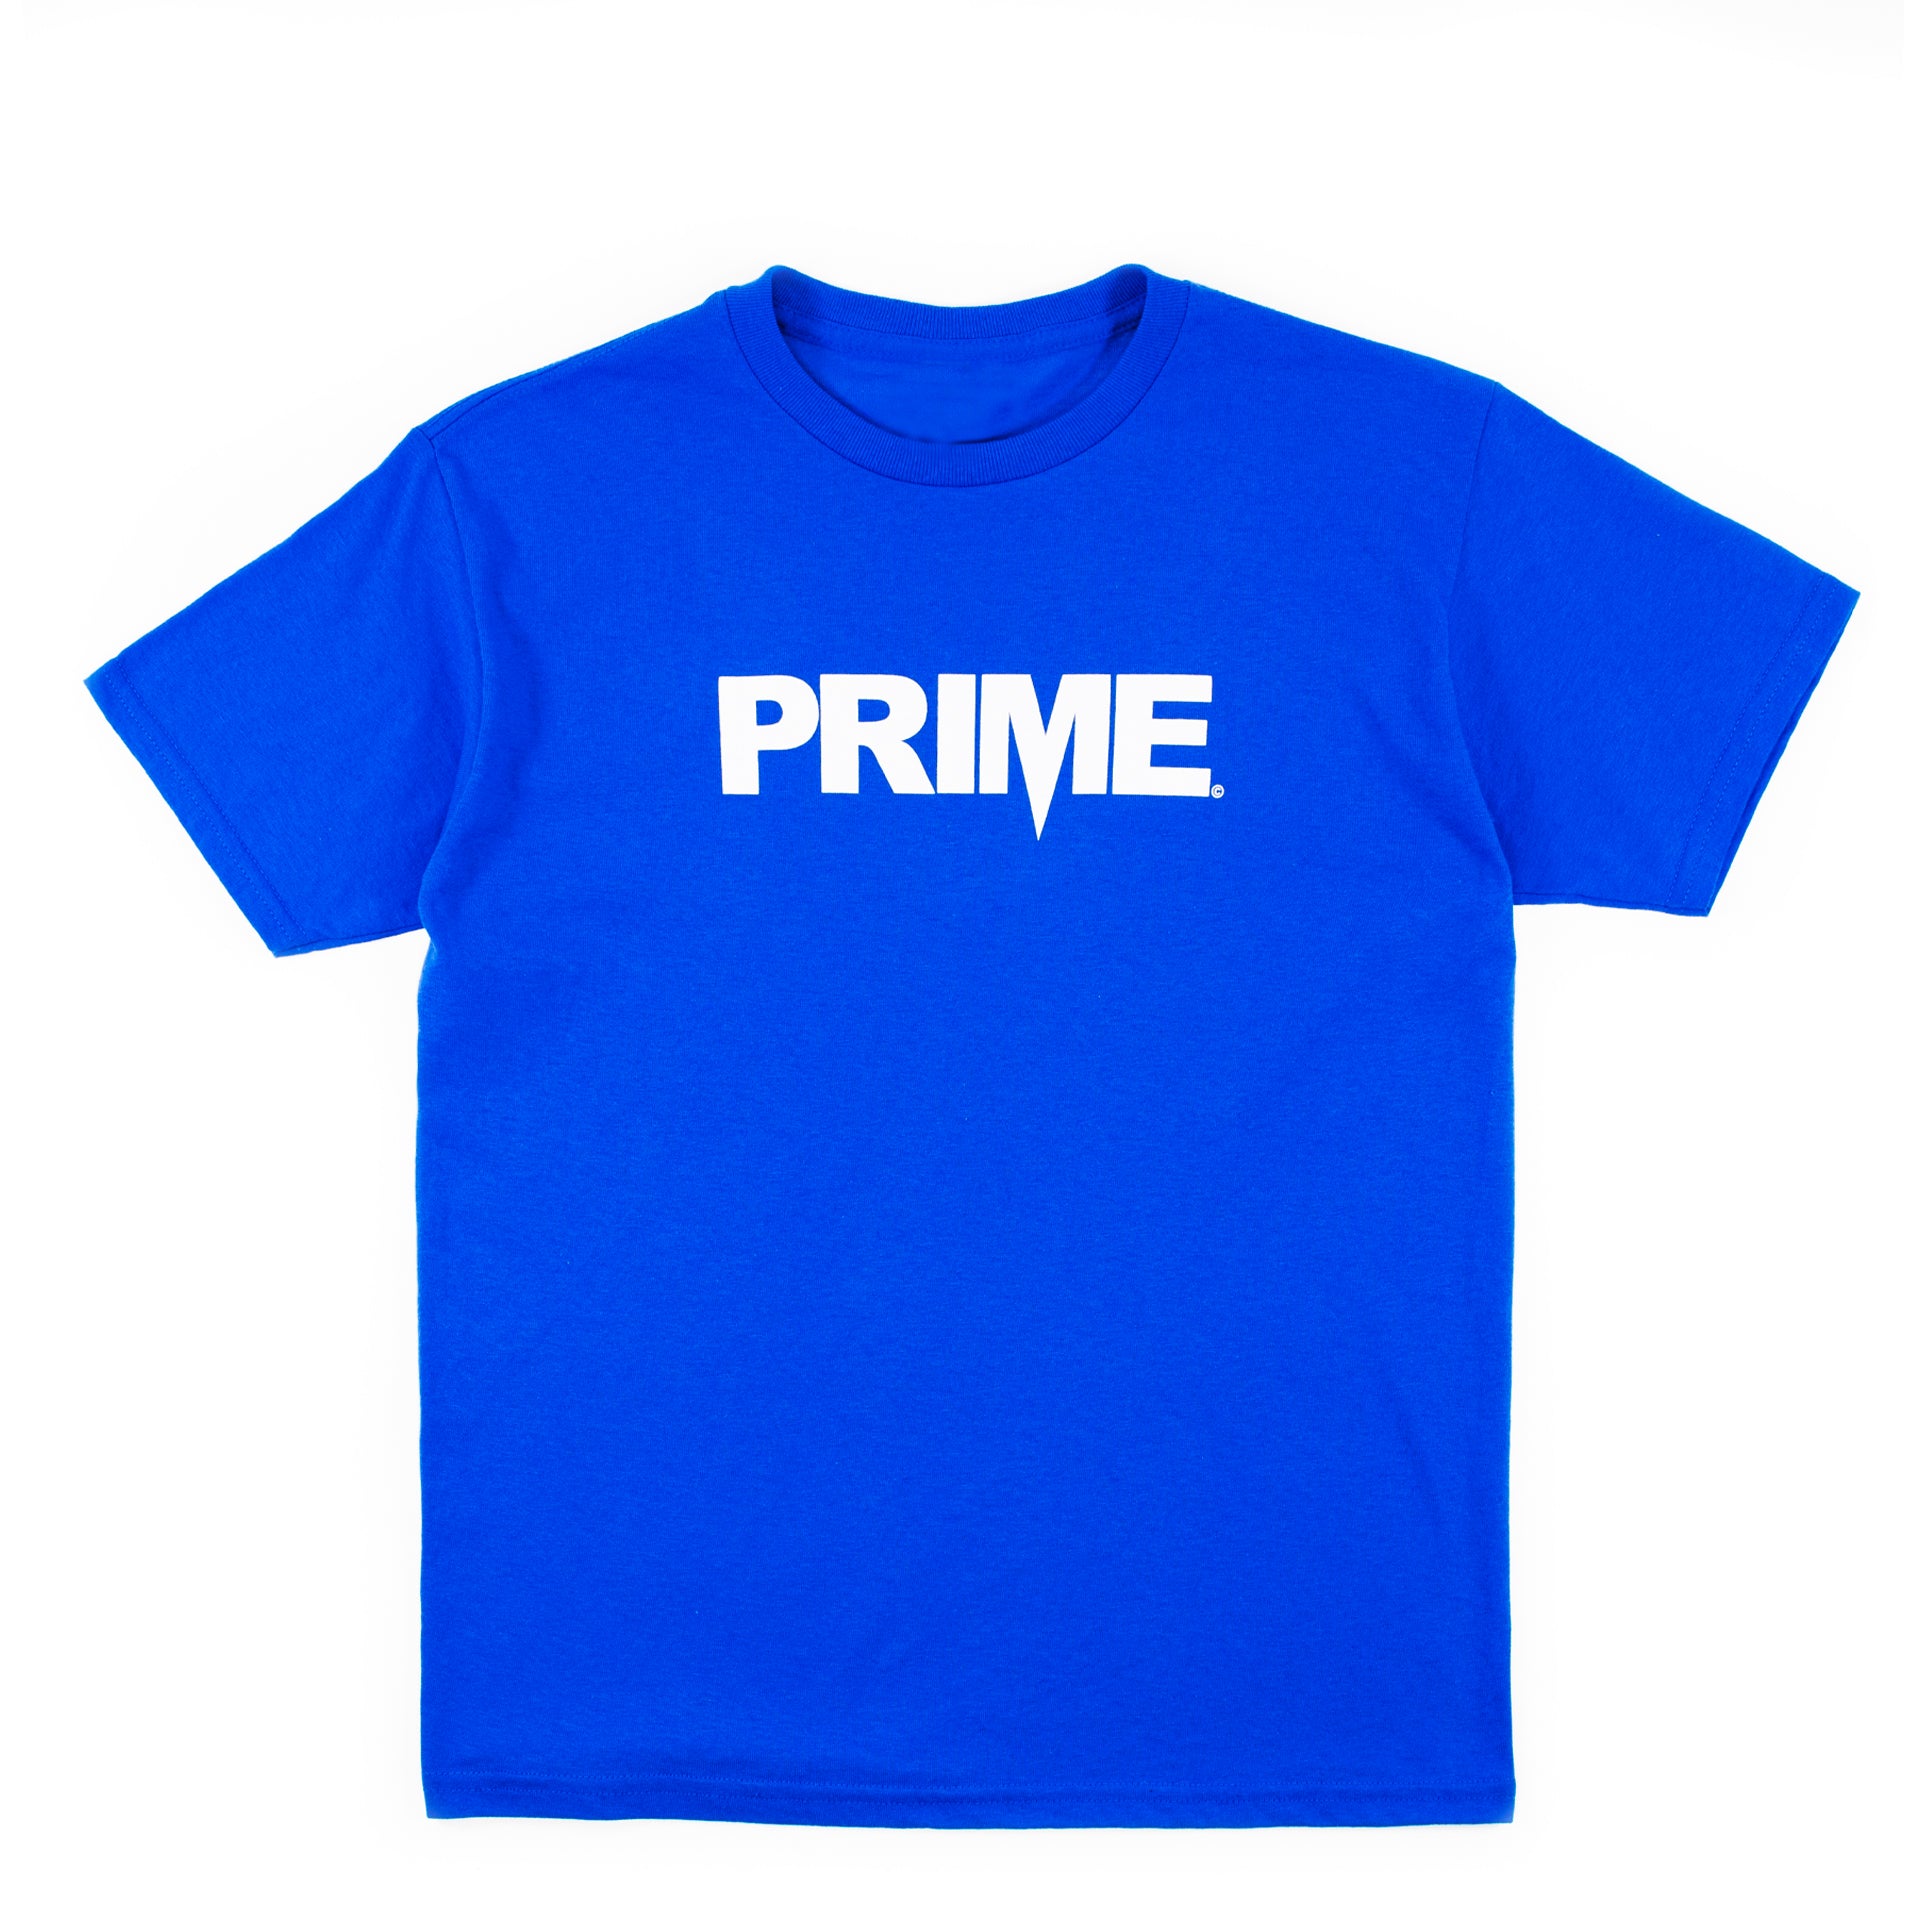 Prime Delux OG Logo Kids T Shirt - Royal Blue / White - Prime Delux Store